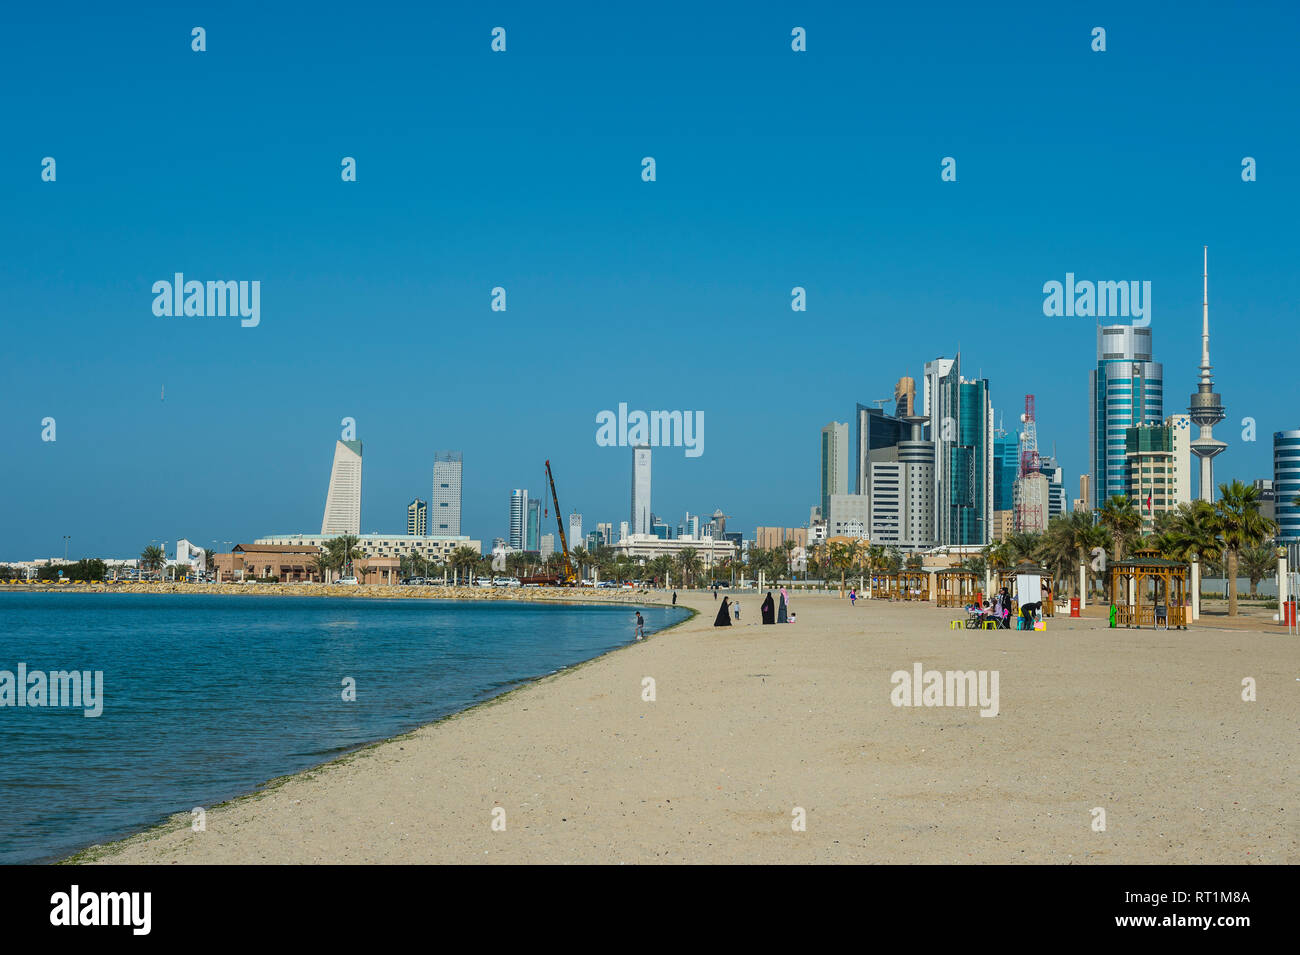 Arabia, Kuwait City, Shuwaikh beach Stock Photo